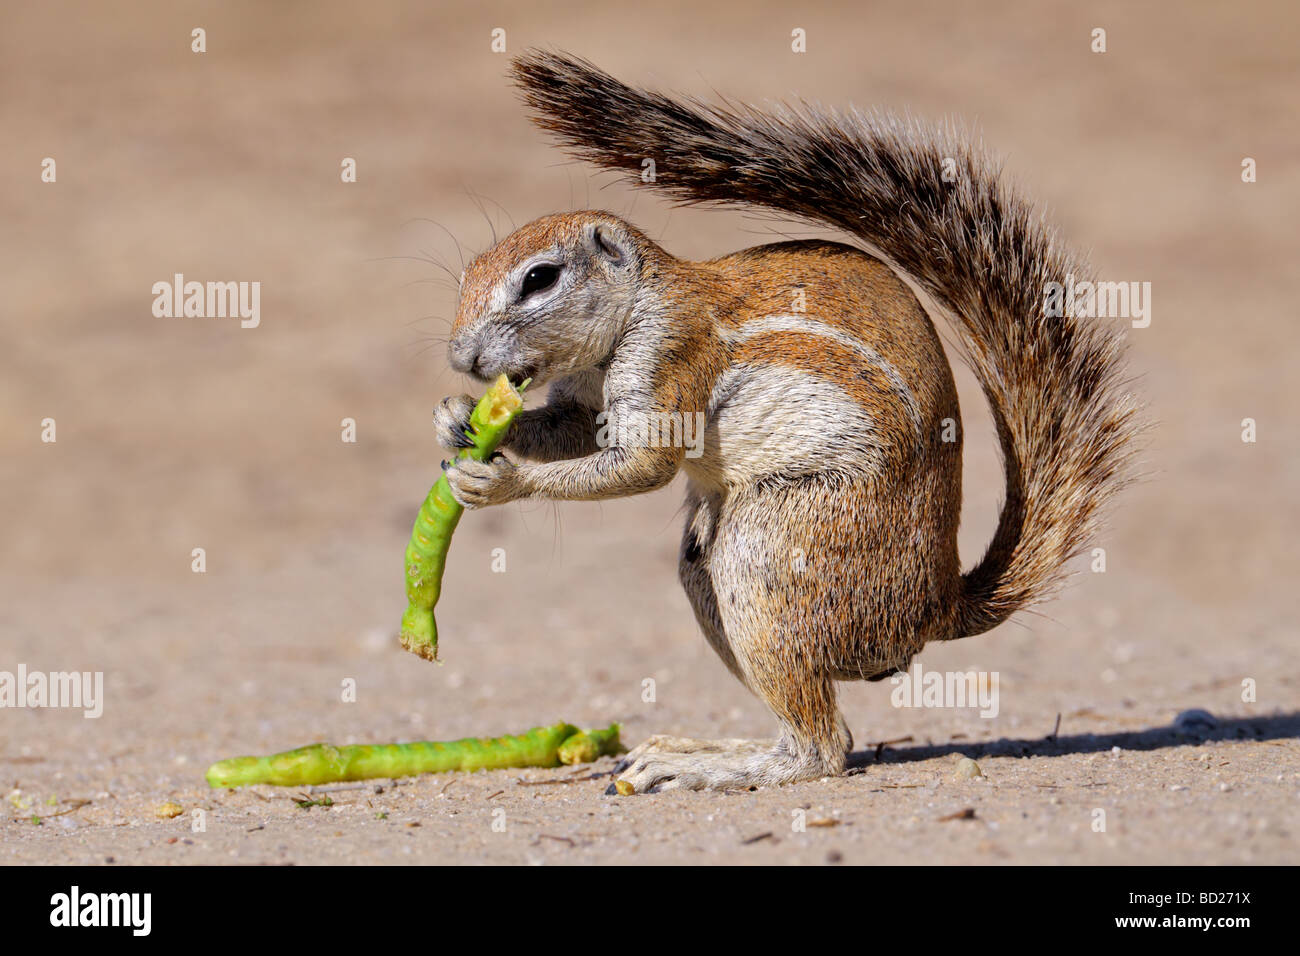 Feeding ground squirrel (Xerus inaurus), Kgalagadi Transfrontier Park, South Africa Stock Photo